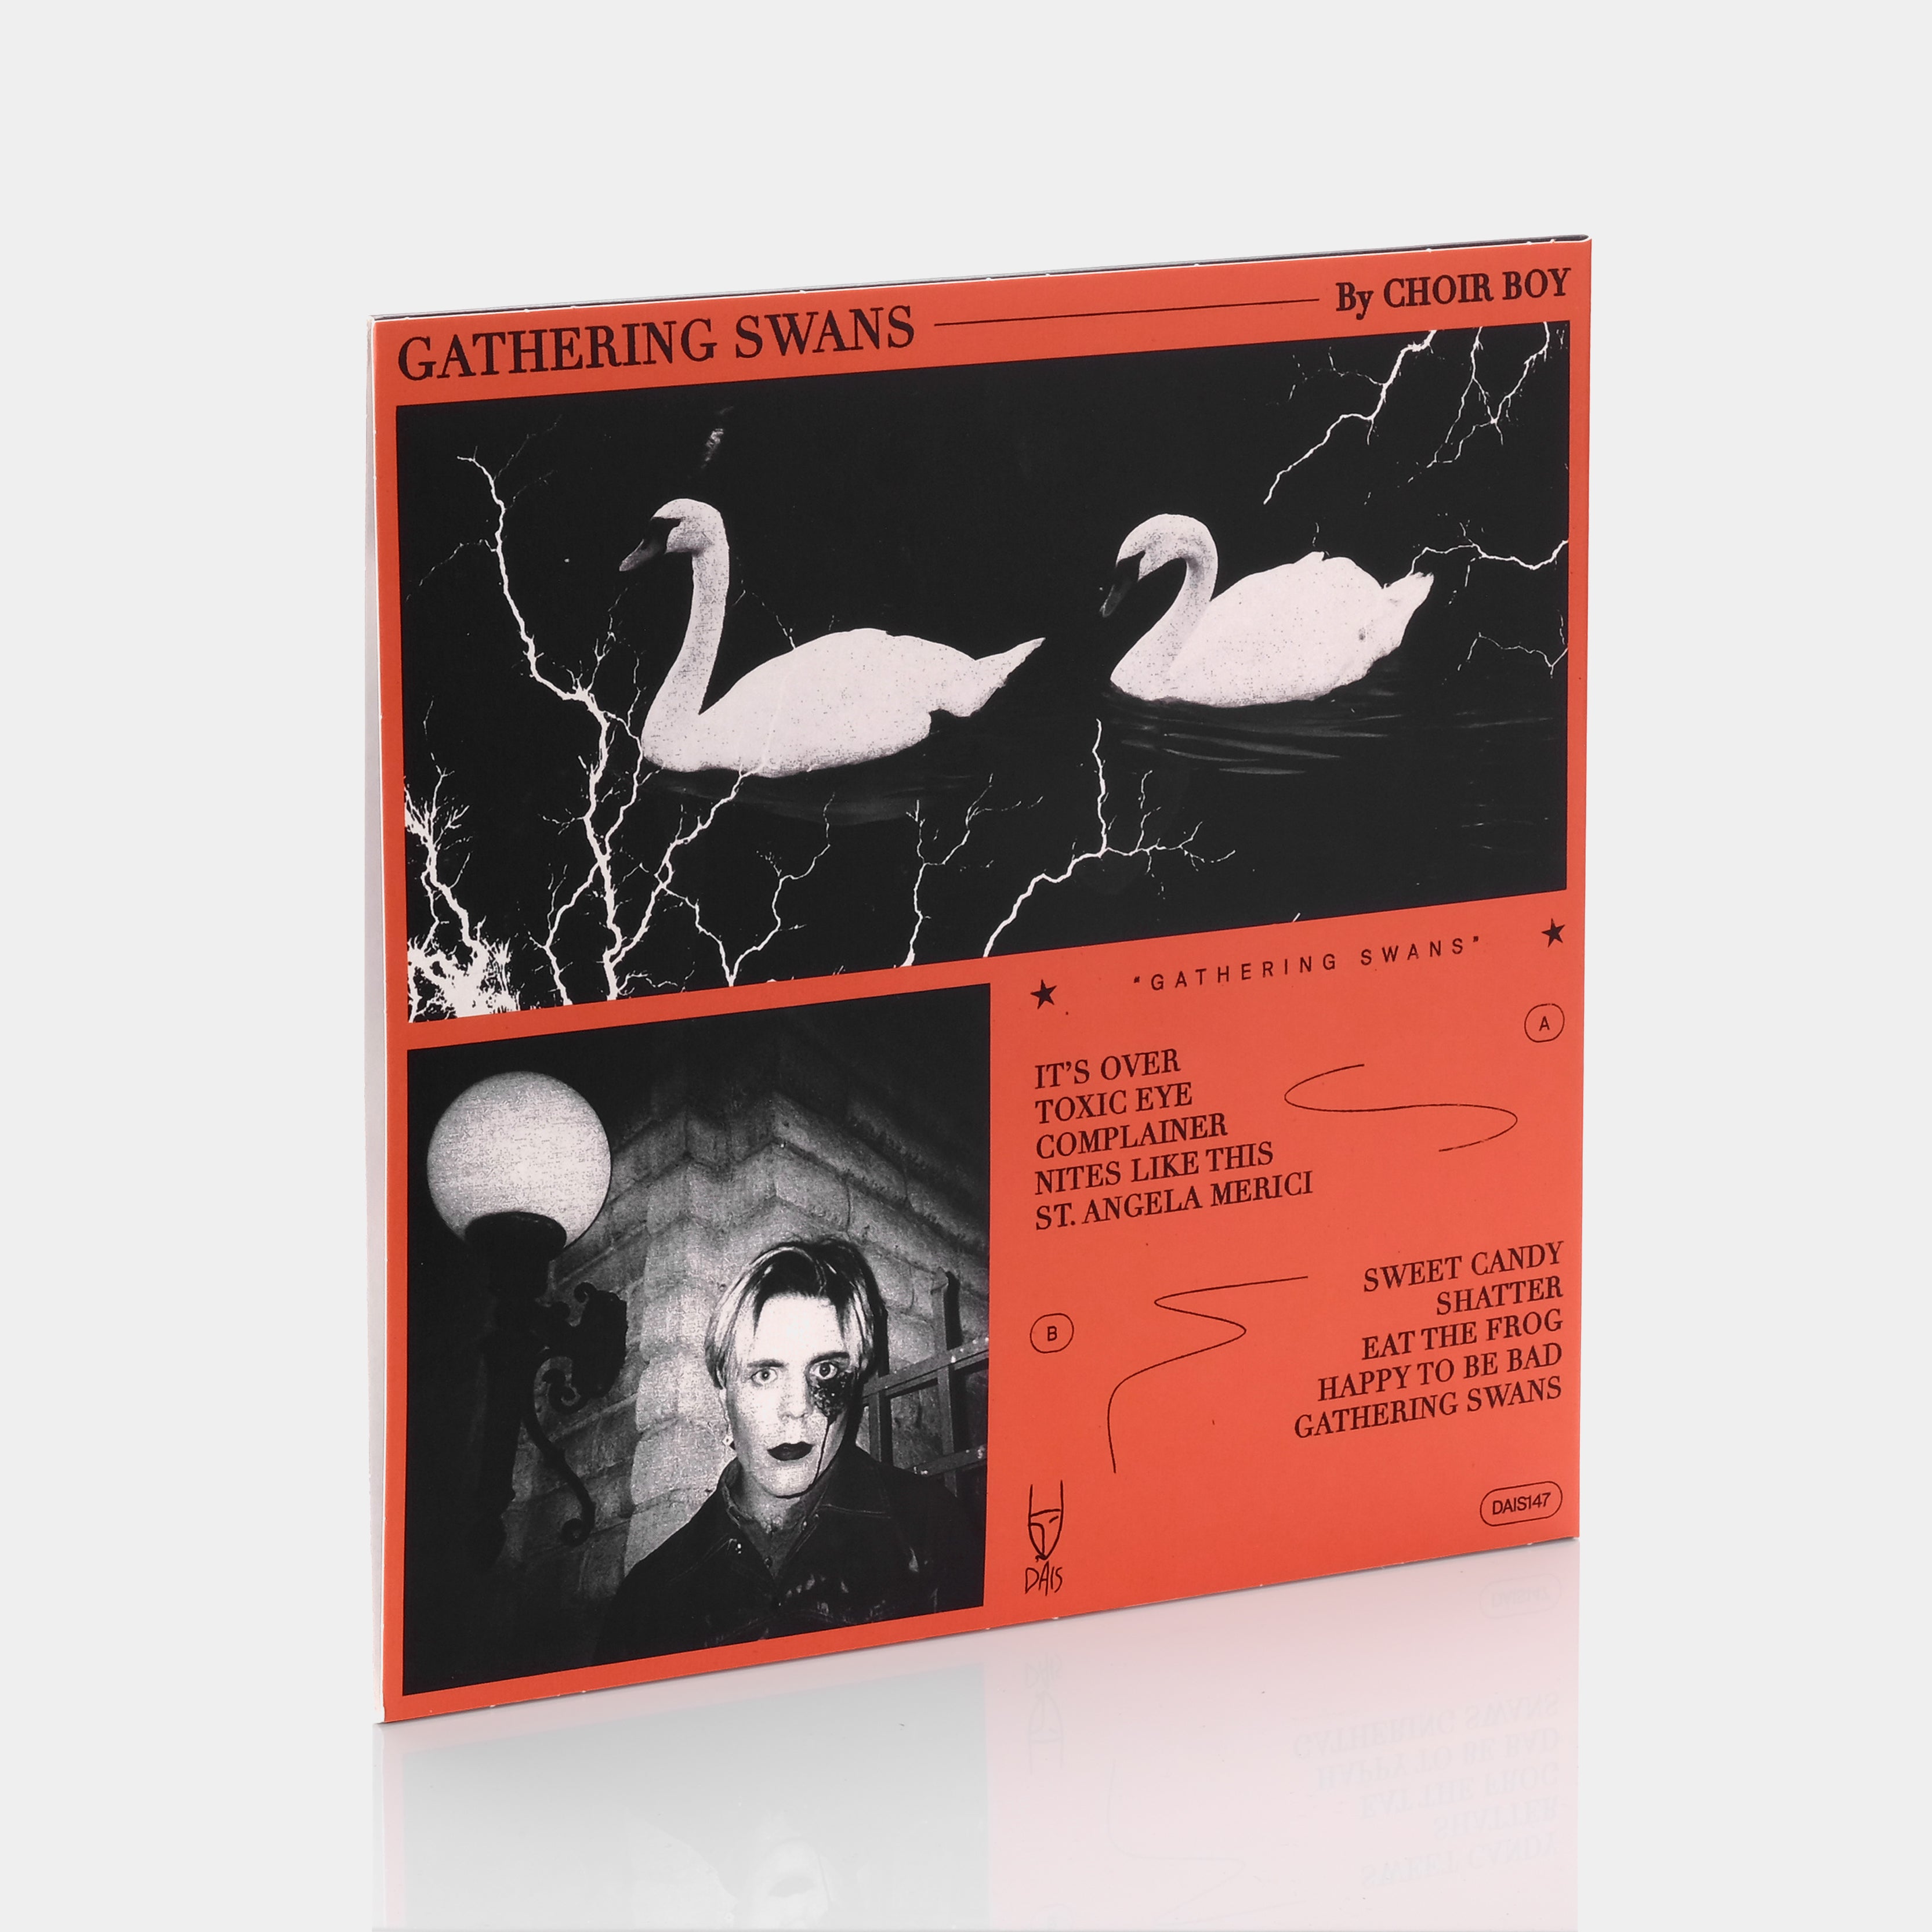 Choir Boy - Gathering Swans Limited Edition LP Neon Yellow Vinyl Record